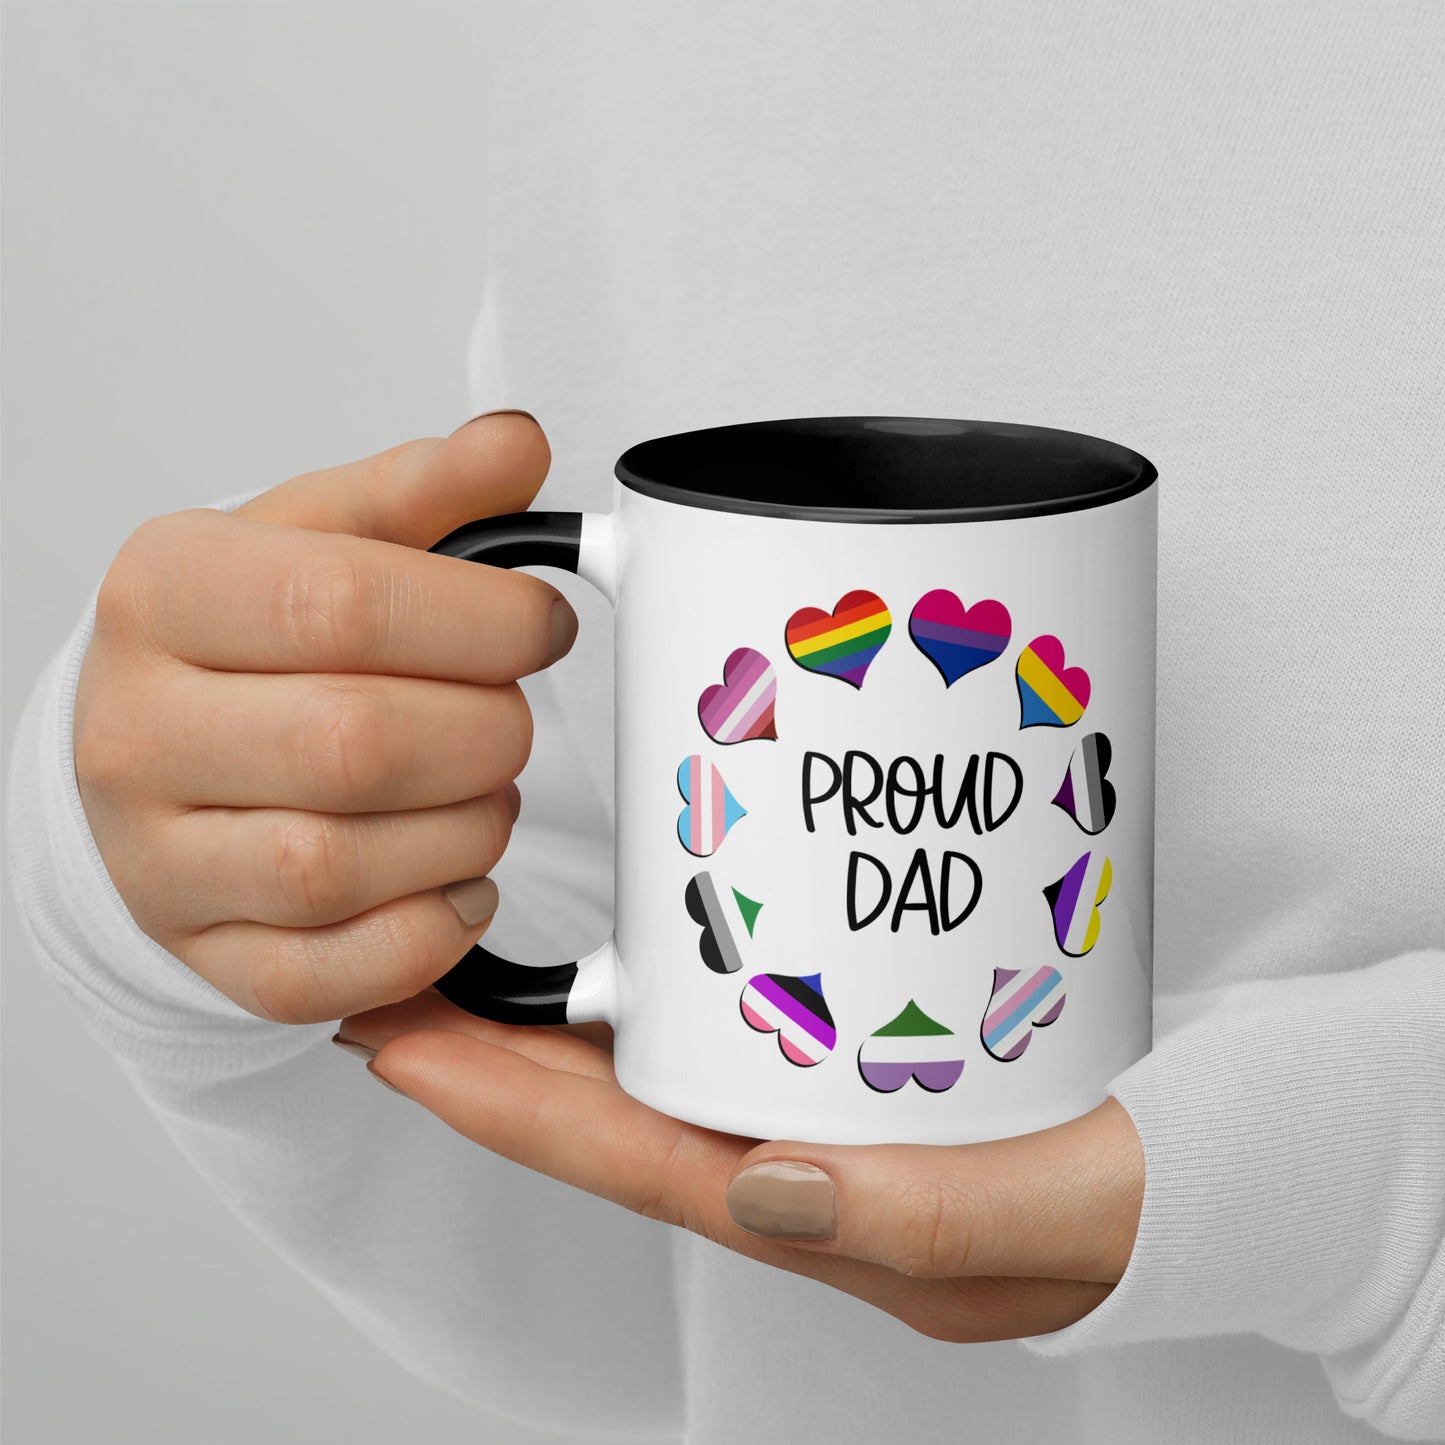 Proud Dad Mug in two sizes